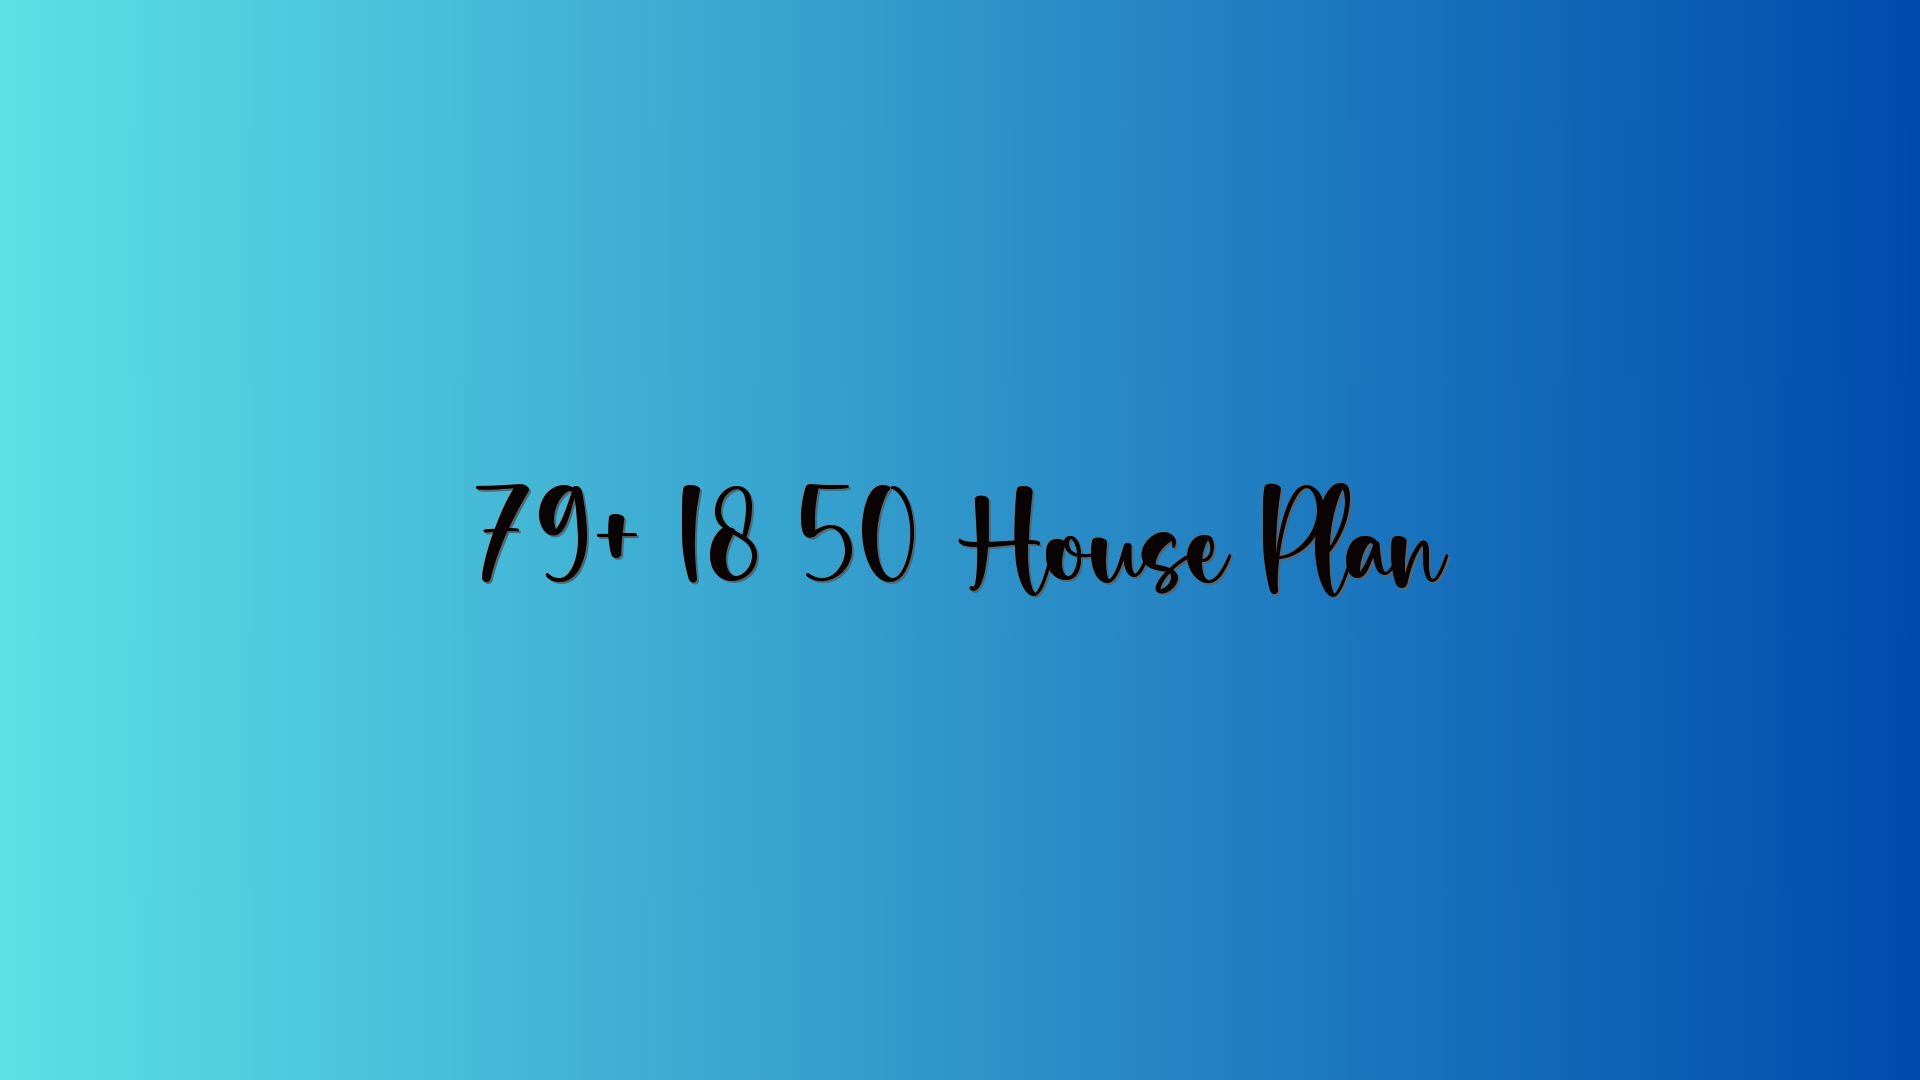 79+ 18 50 House Plan